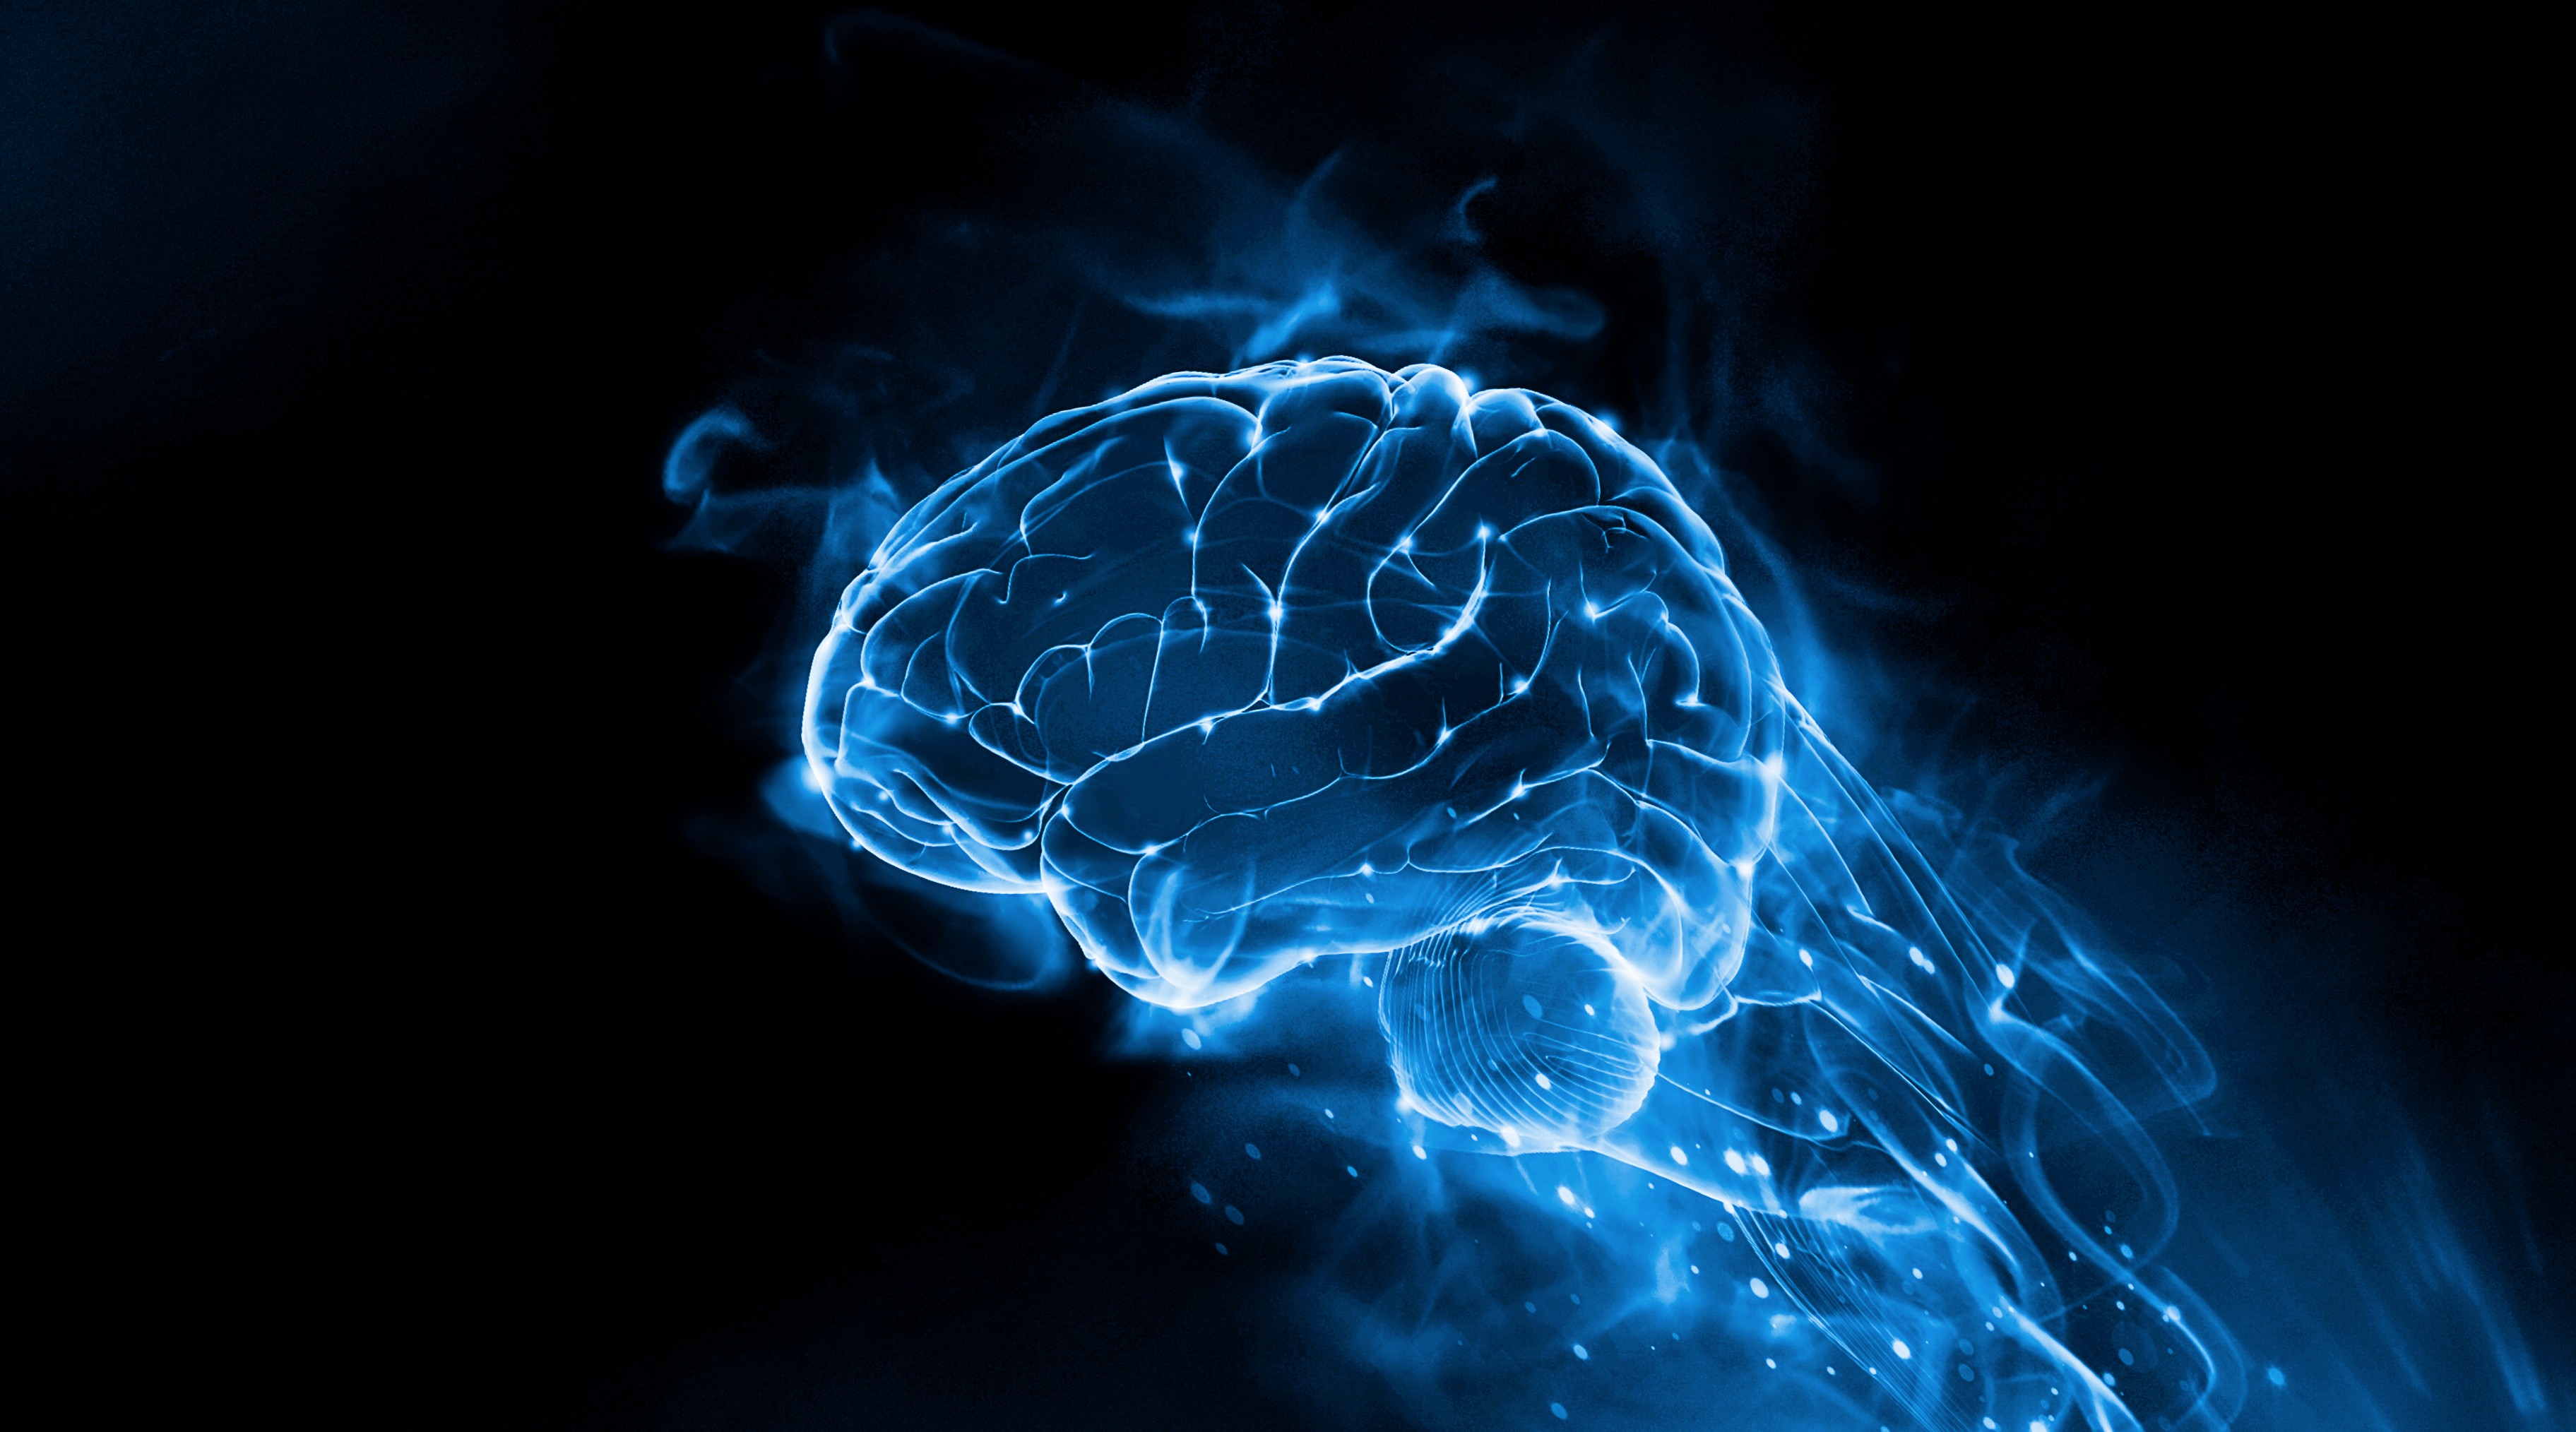 Glowing blue digital rendering of a human brain against a black background.